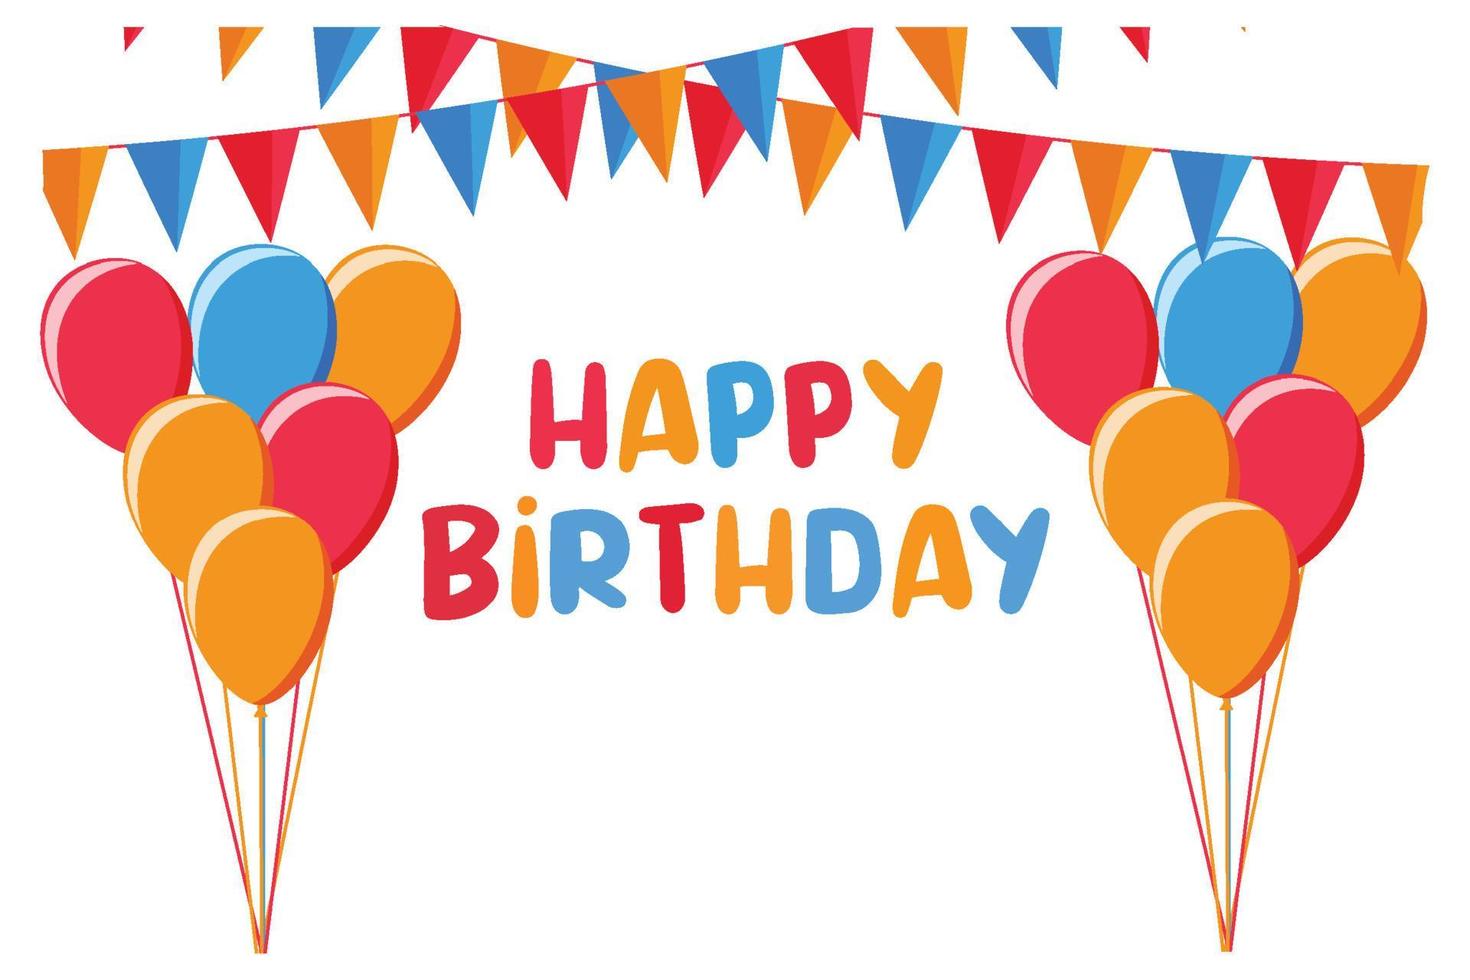 Happy Birthday wish  balloons background vector